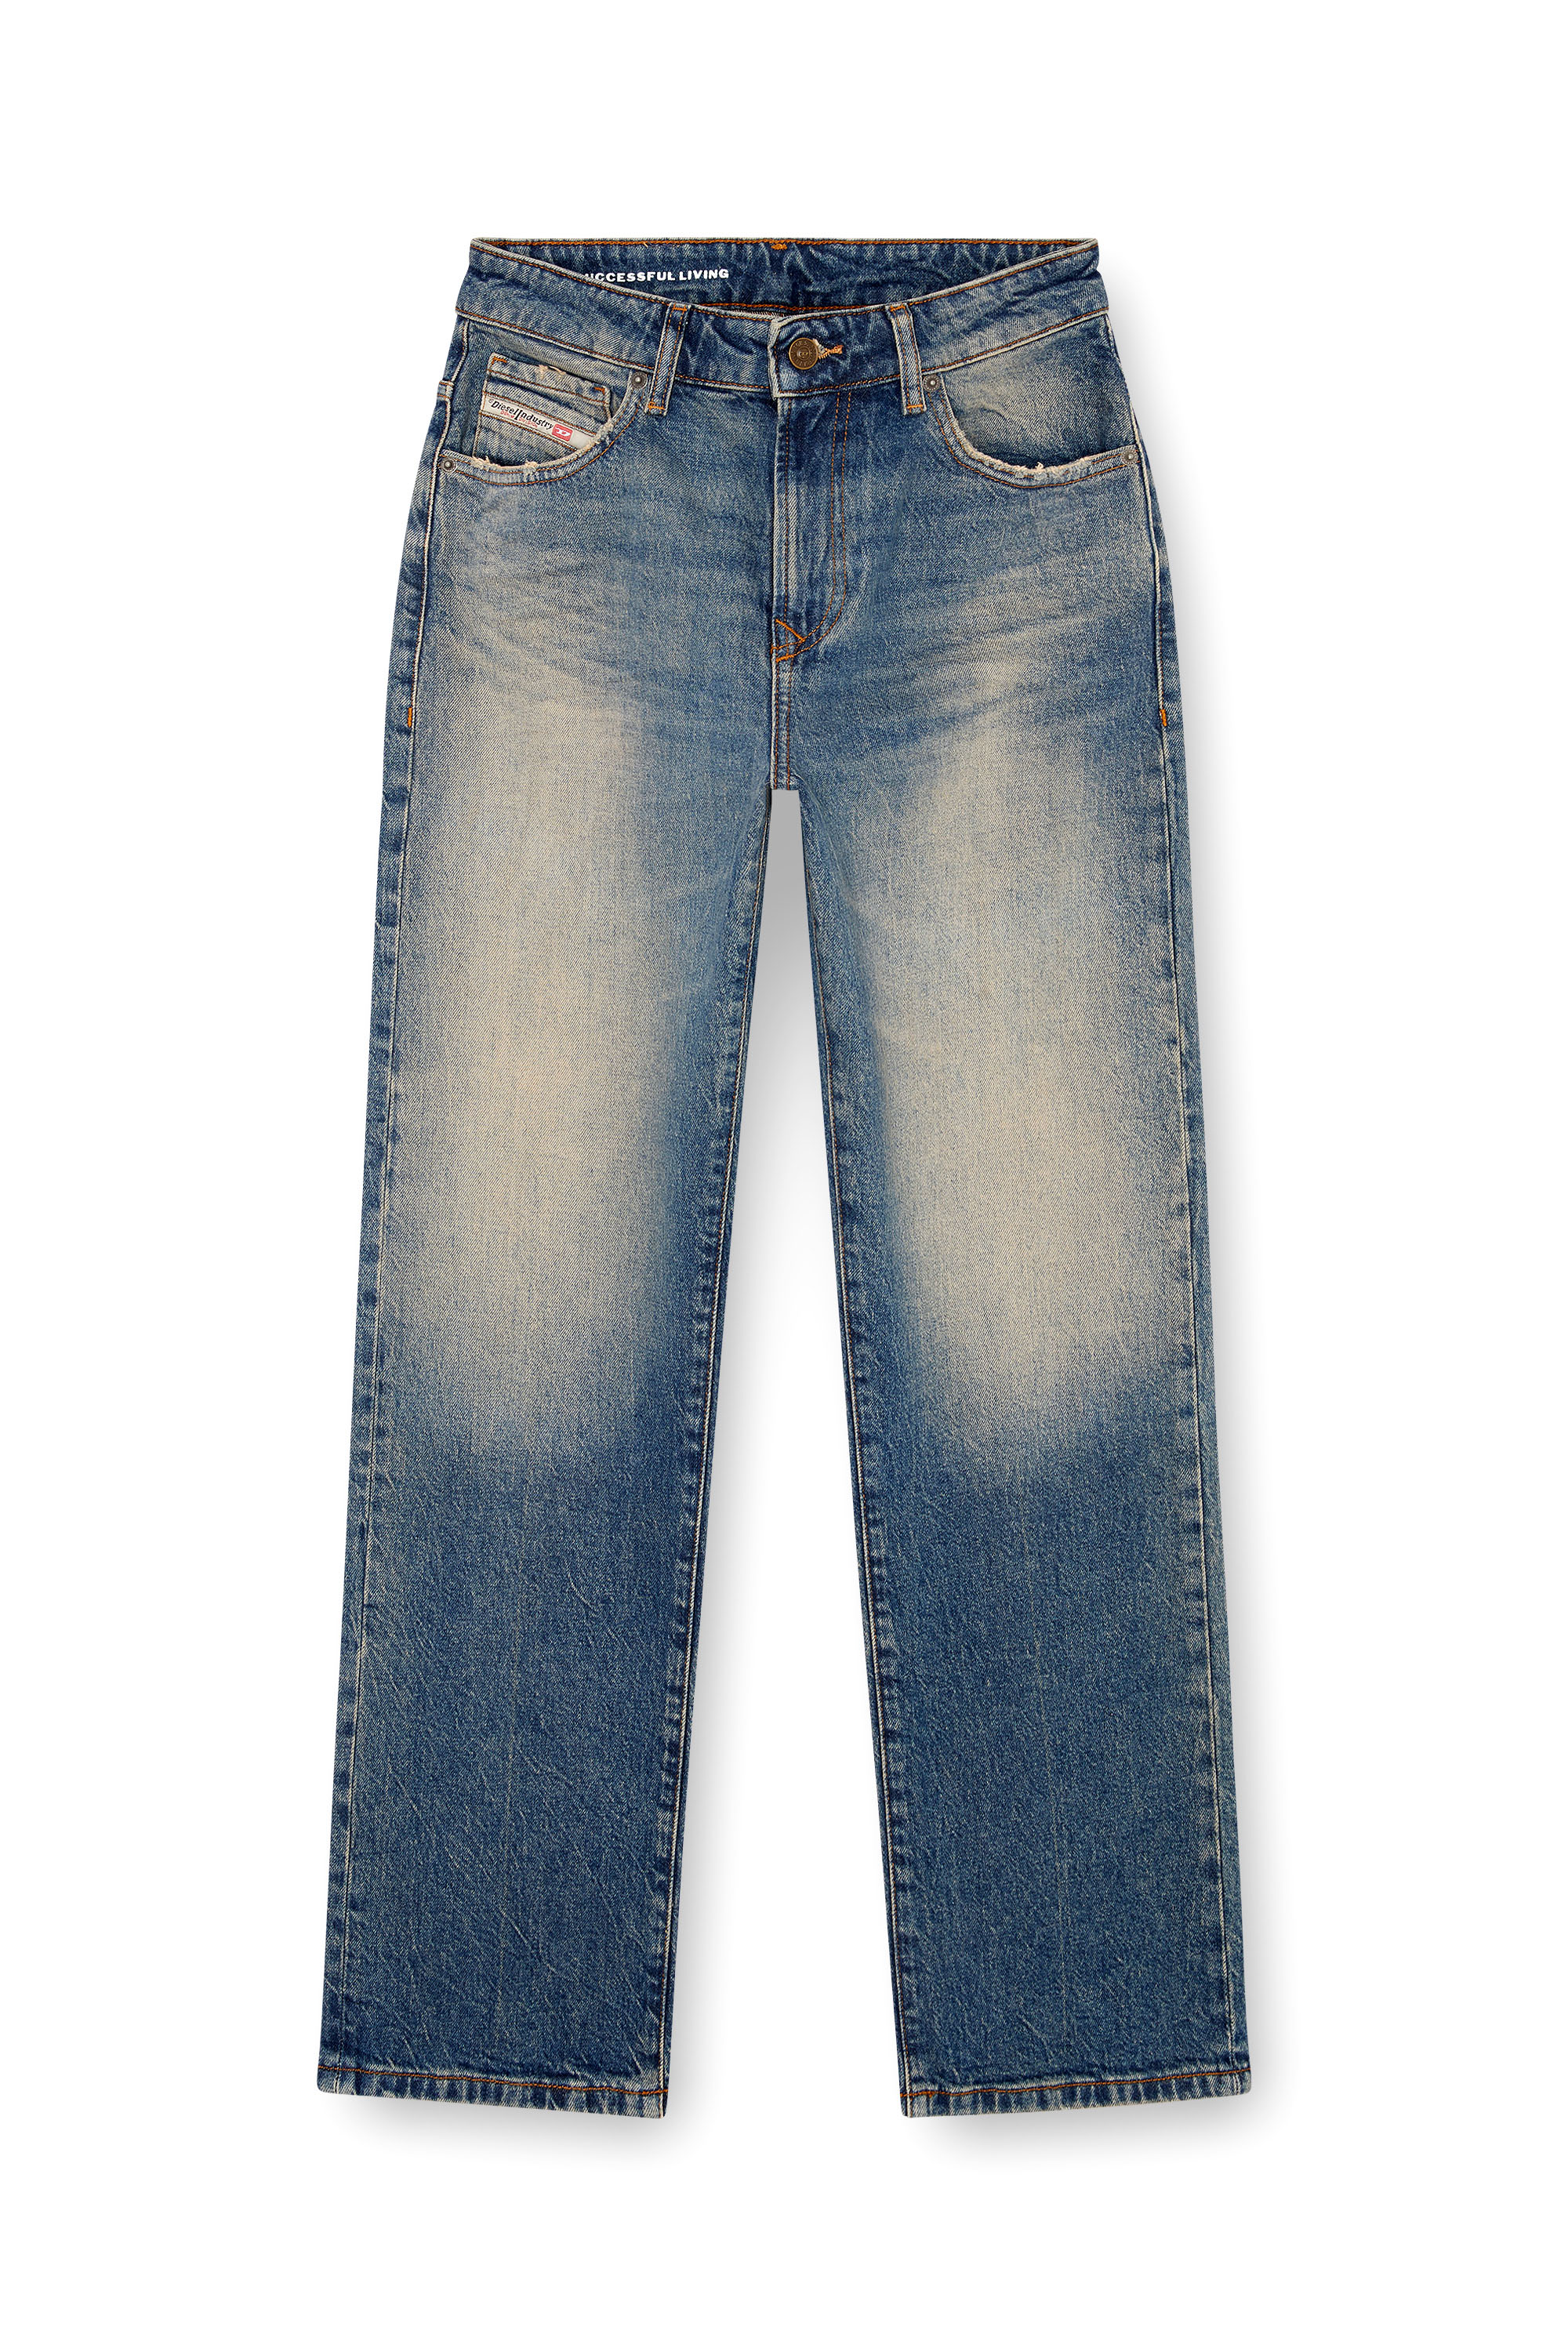 Diesel - Straight Jeans 1999 D-Reggy 0GRDH, Mujer Straight Jeans - 1999 D-Reggy in Azul marino - Image 3